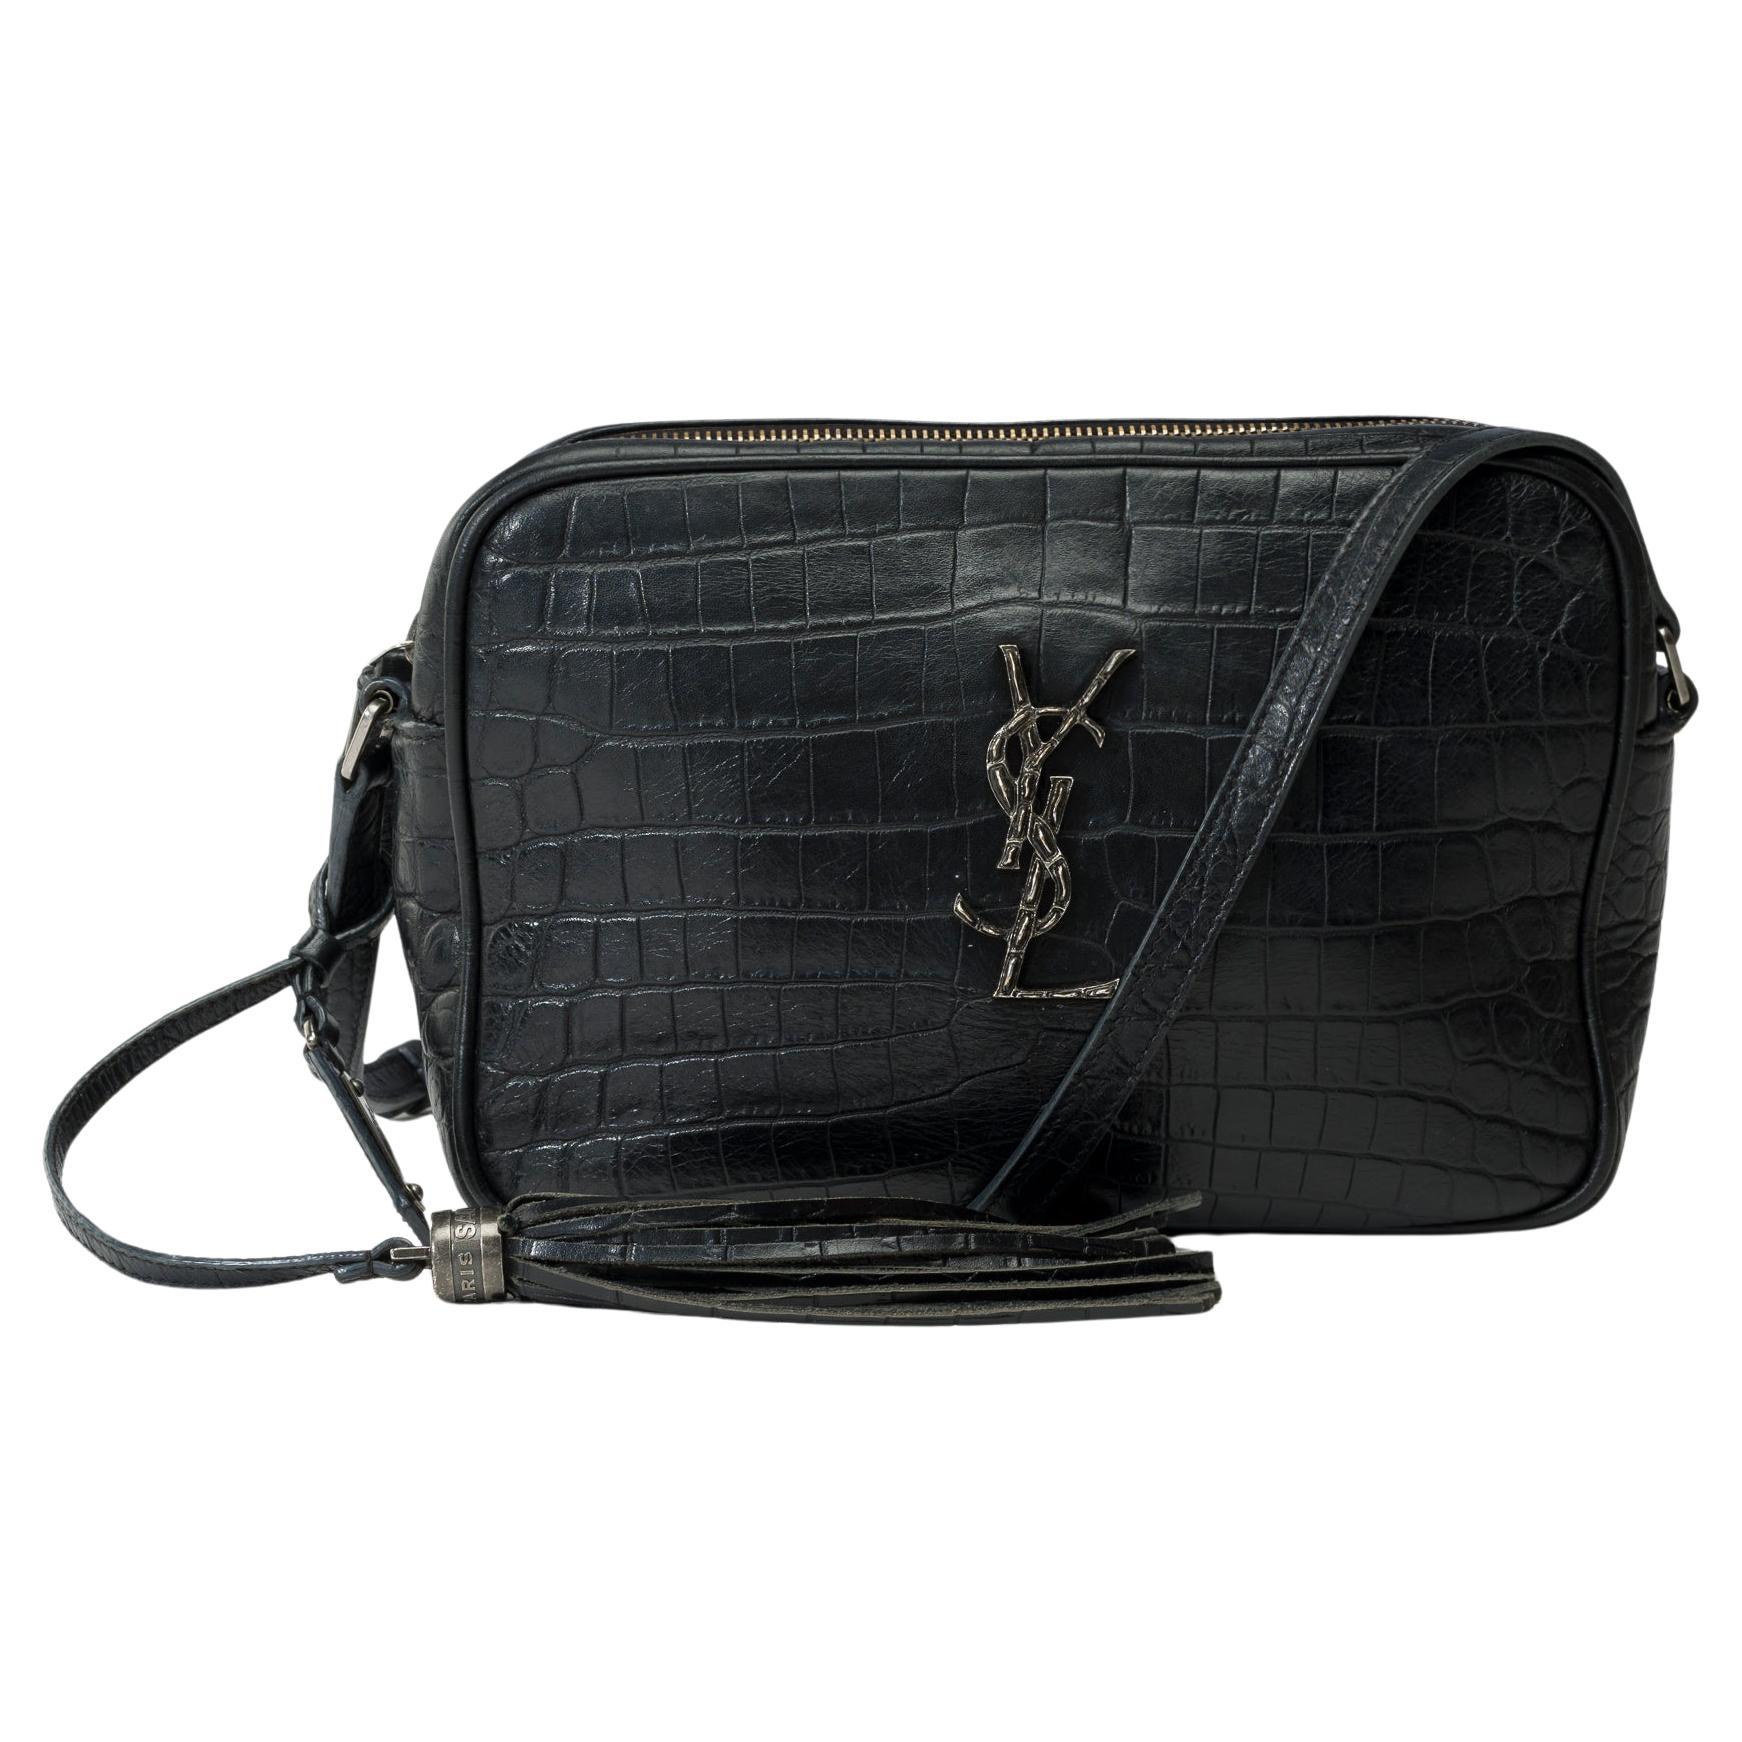 YSL Lou Camera shoulder bag in Black Crocodile style calf leather, SHW